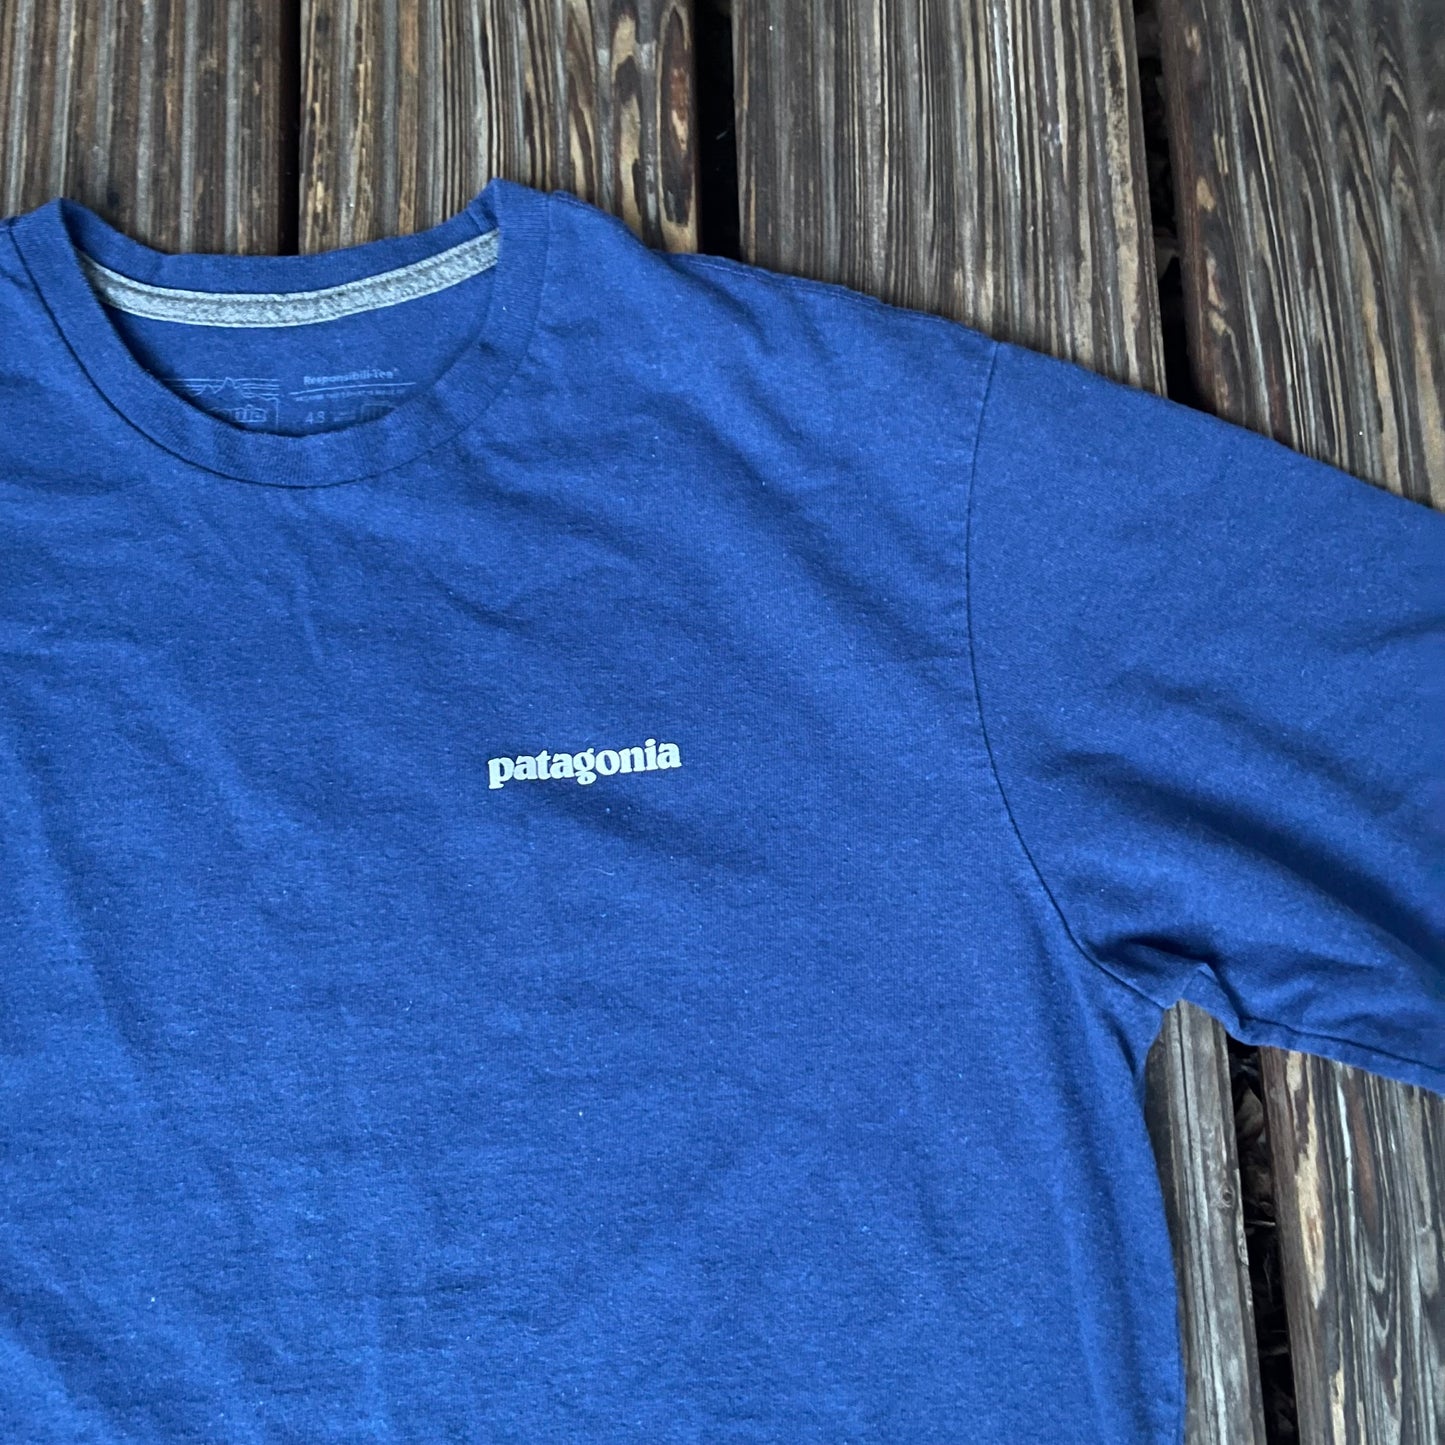 T-Shirt Patagonia Herren S dunkelblau Backprint